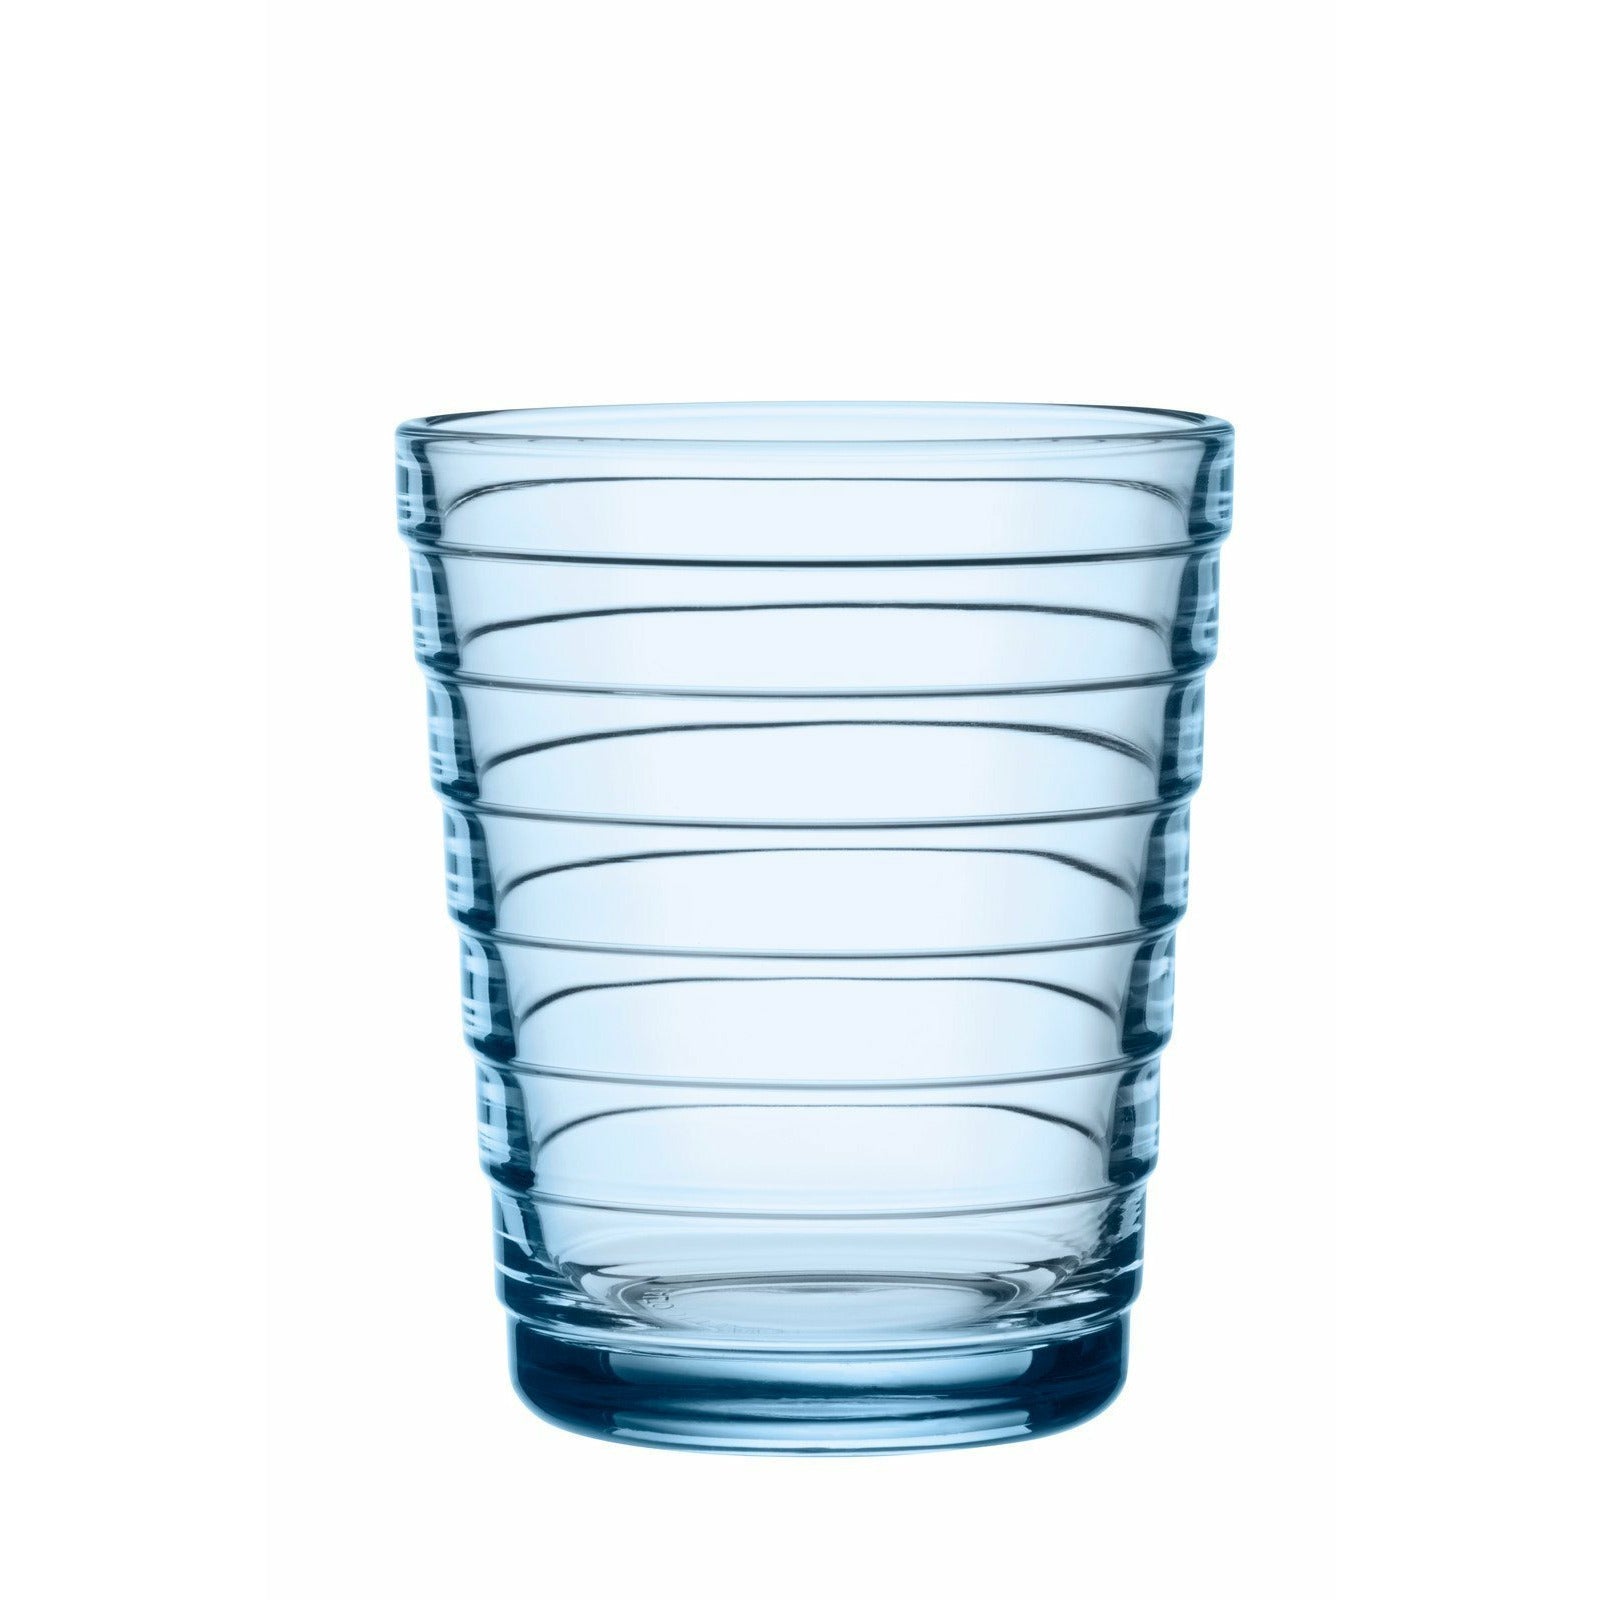 Iittala Aino Aalto Drinking Glass Aqua 22Cl, 2 stk.